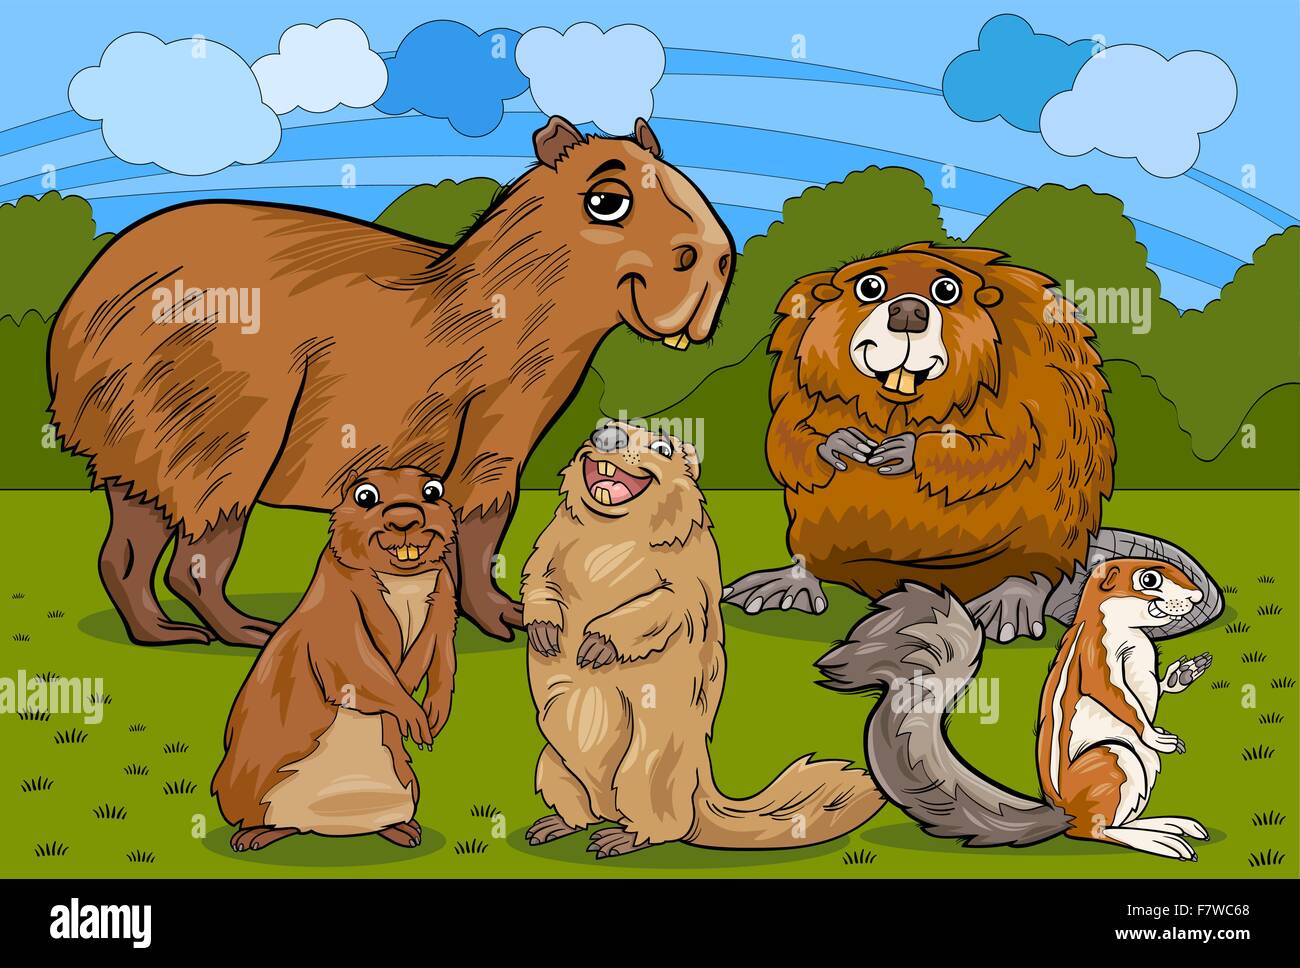 rodents animals cartoon illustration Stock Vector